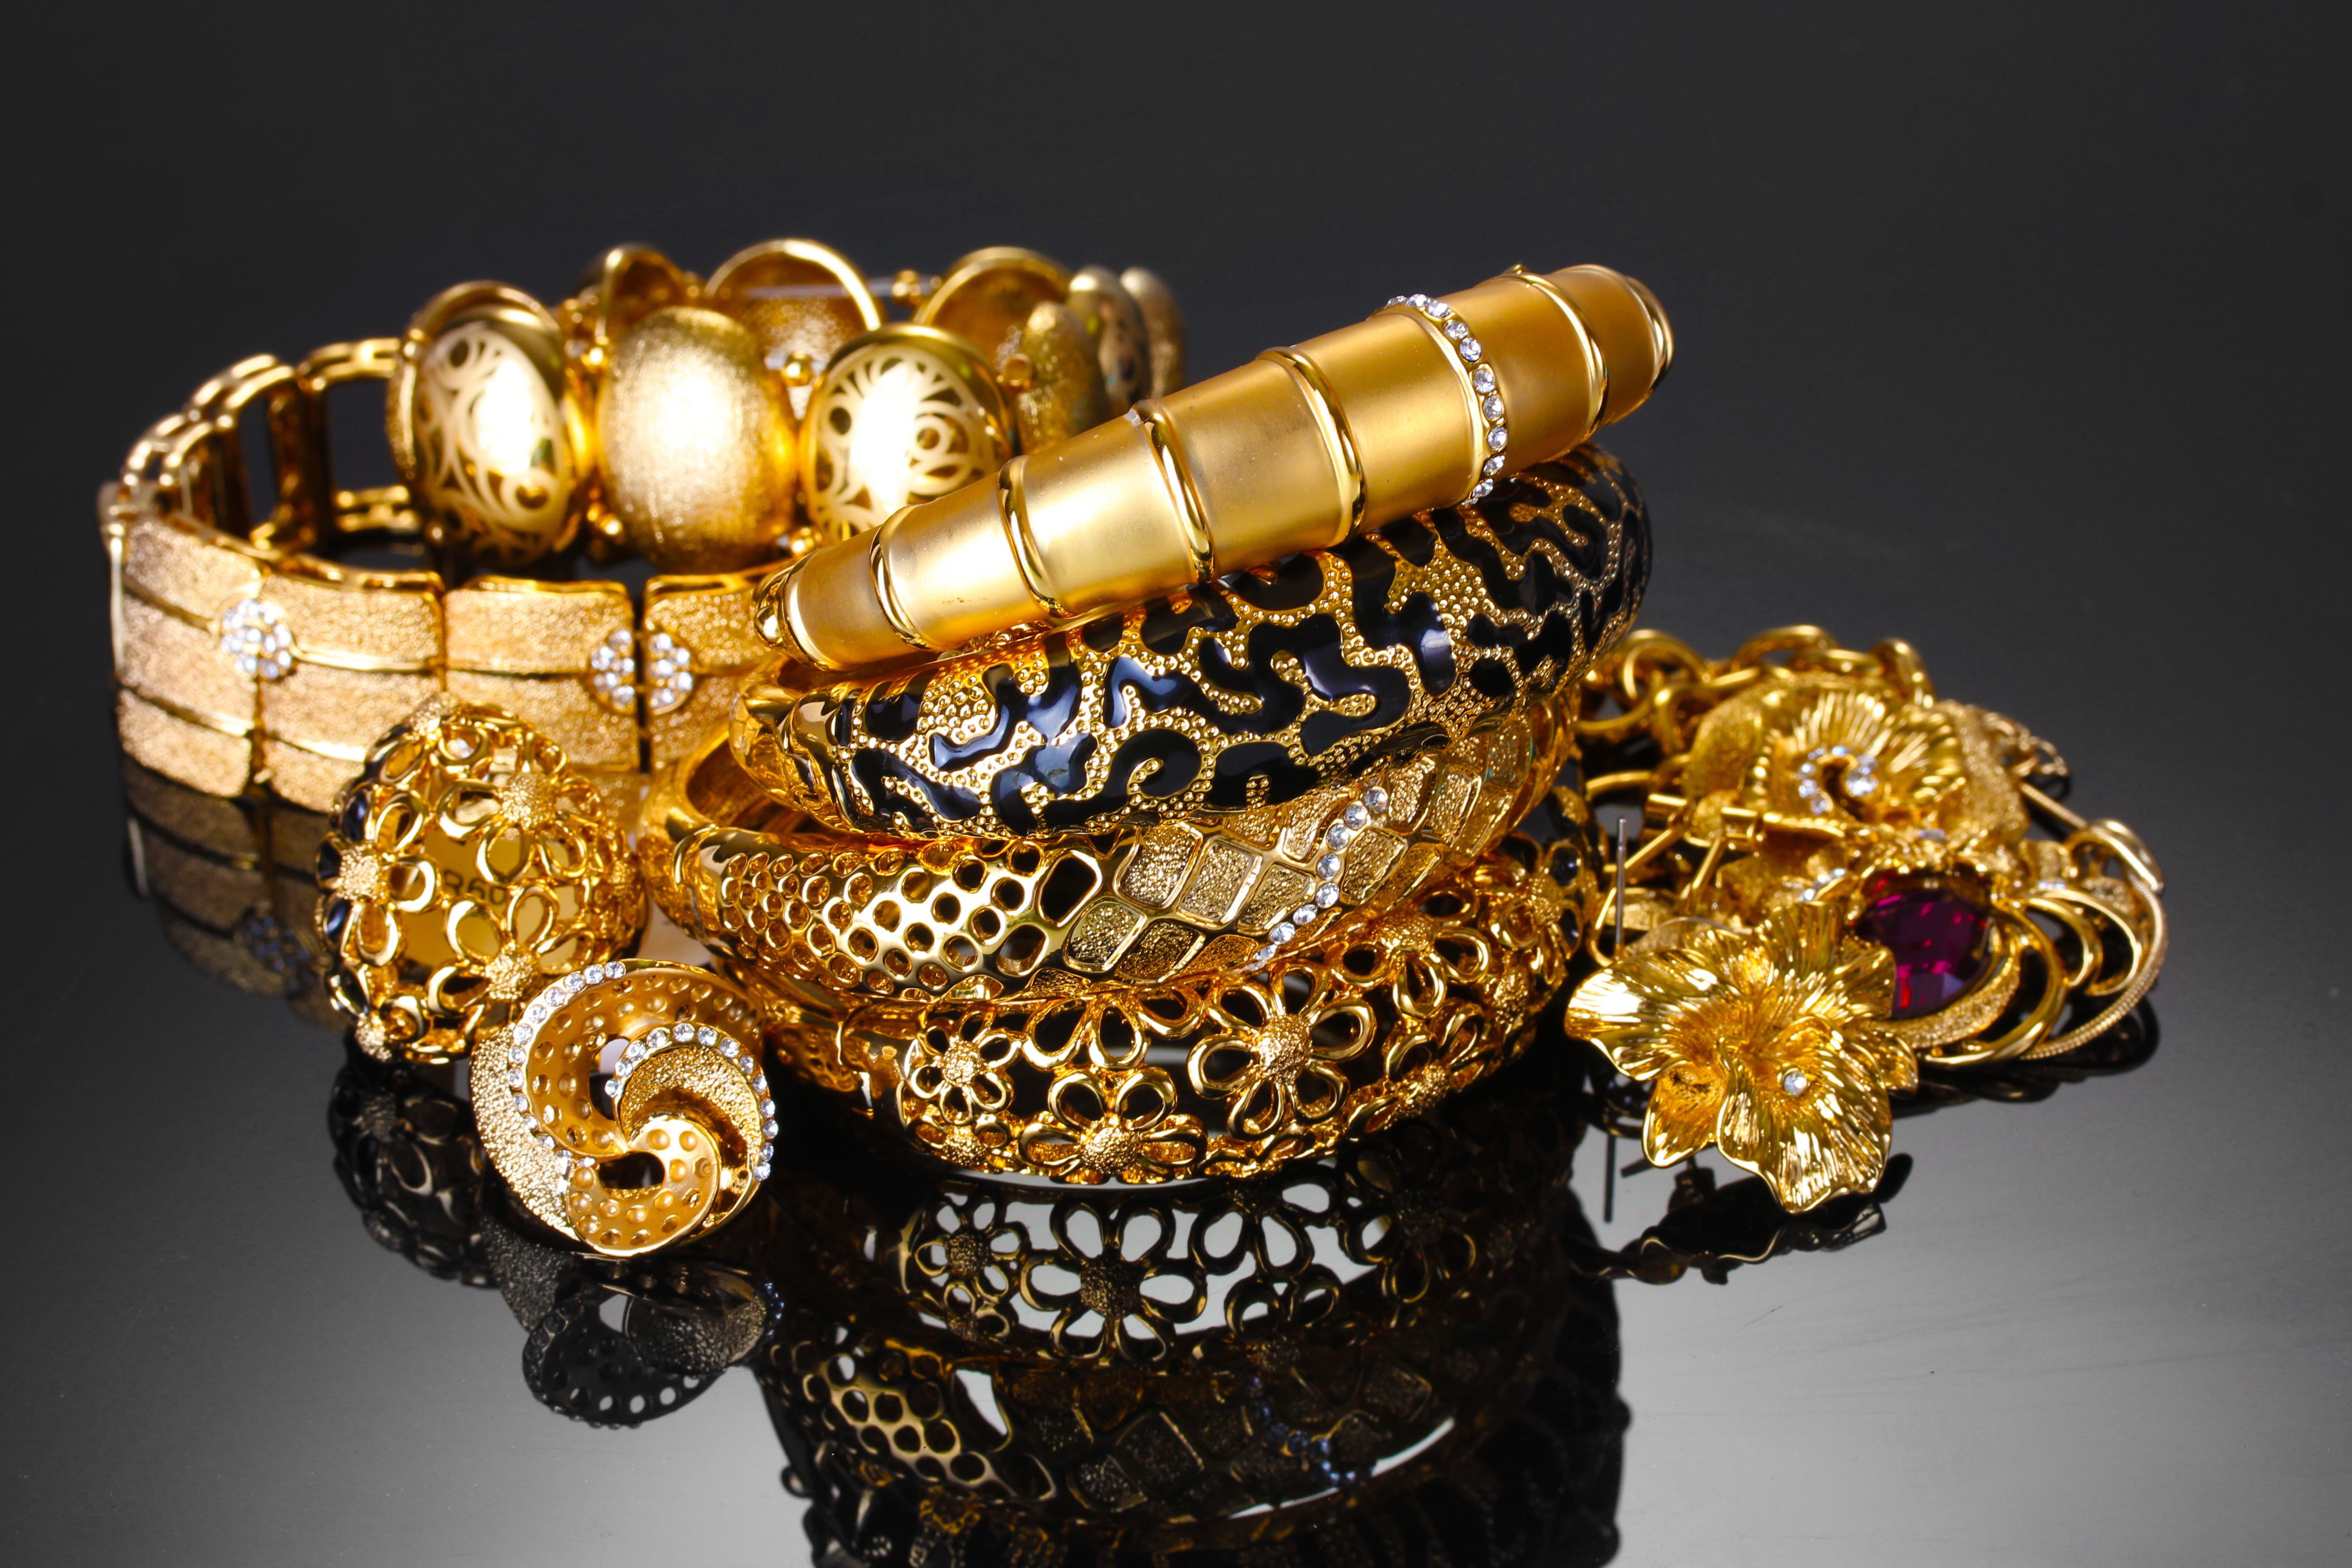 depositphotos_10922362-stock-photo-beautiful-golden-bracelets-rings-and - copy